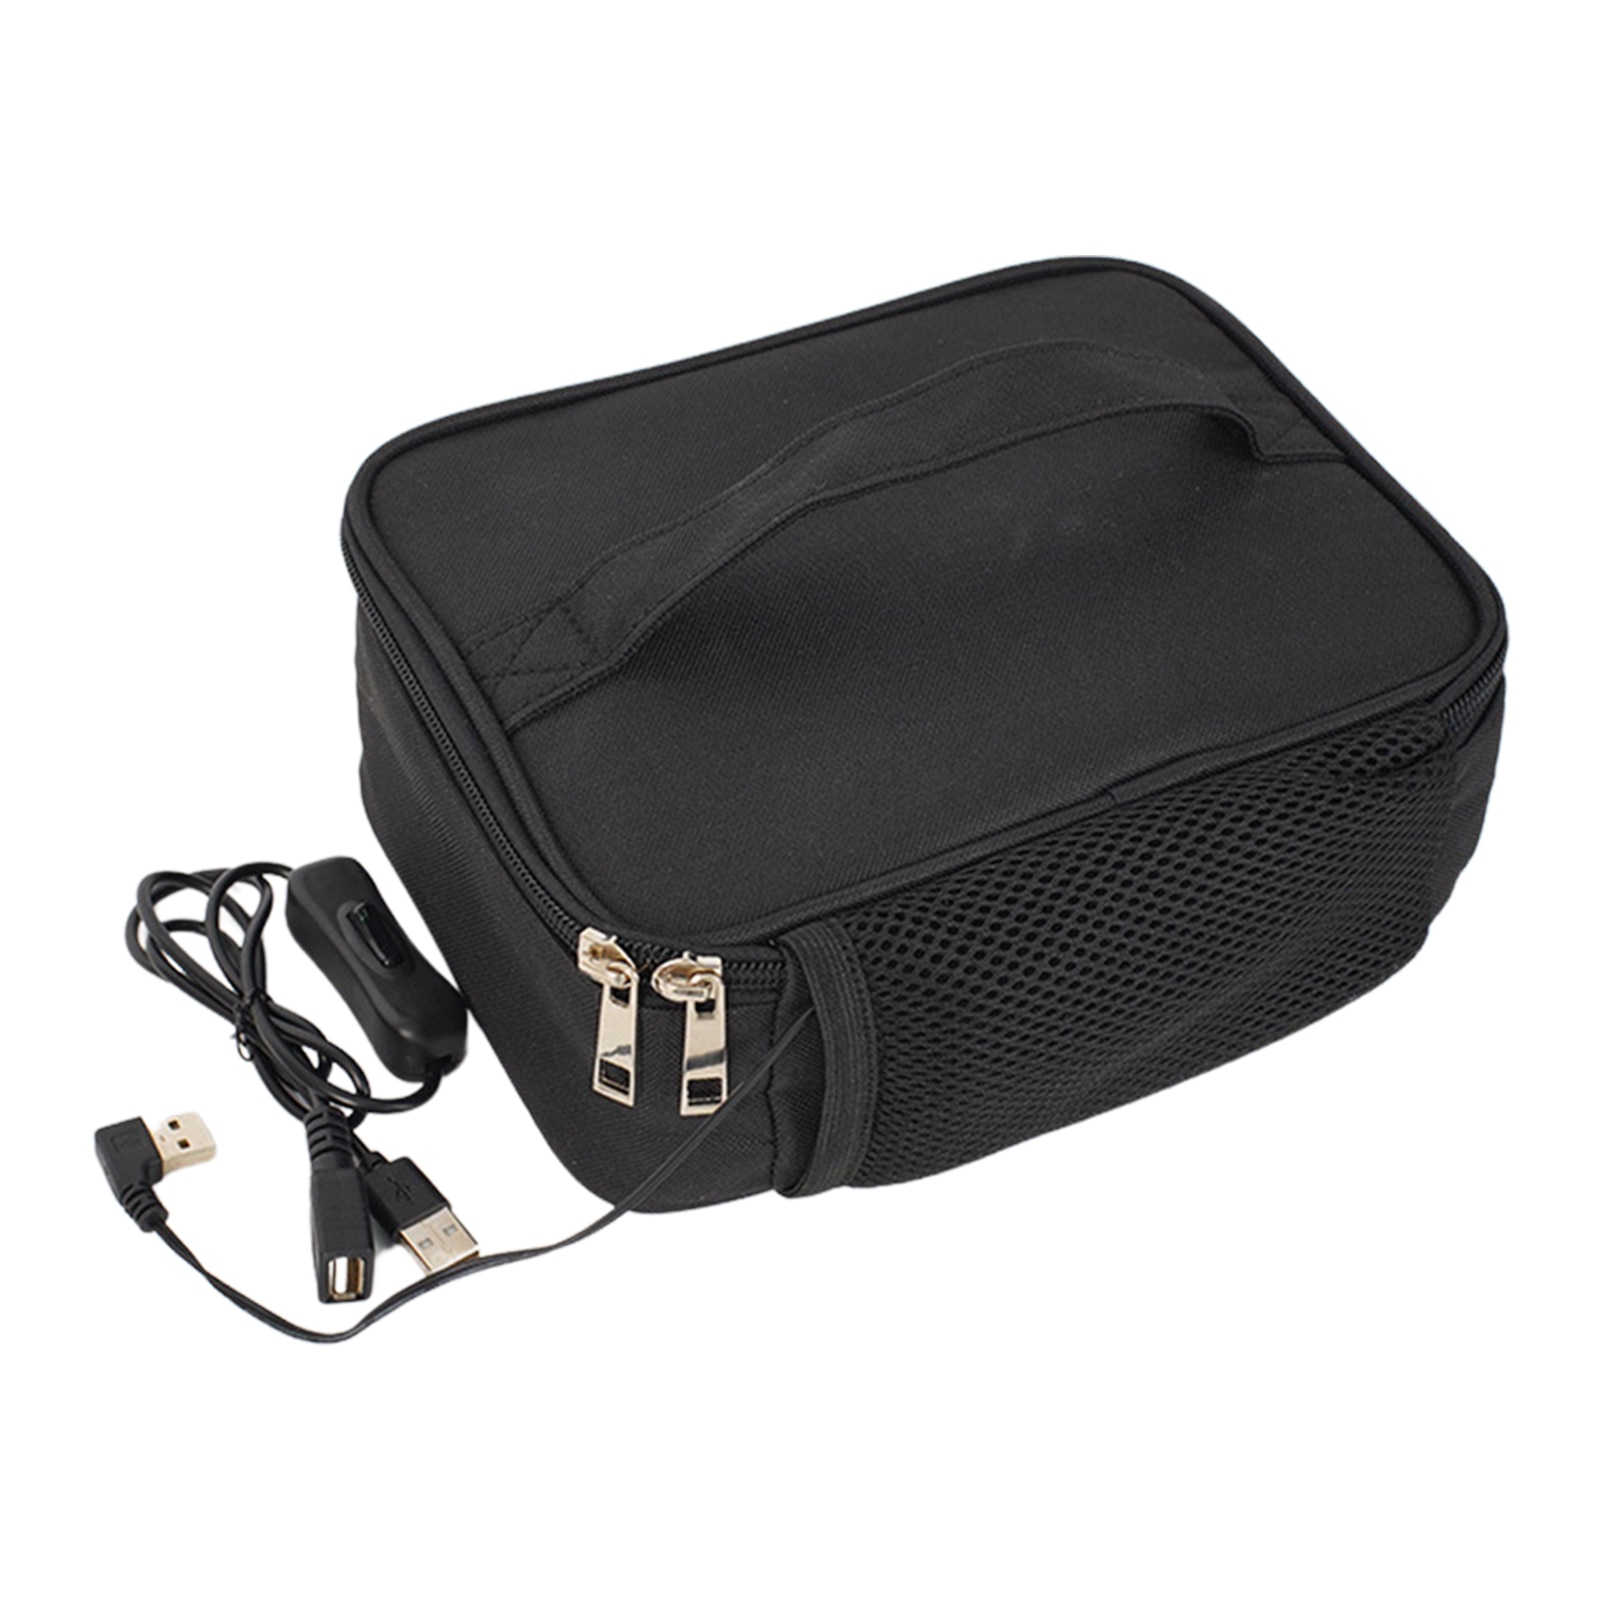 USB 음식 난방 도시락 가방 방수 절연 자동차 피크닉 음식 따뜻한 컨테이너 가방, 전기 히터 패킷 액세서리